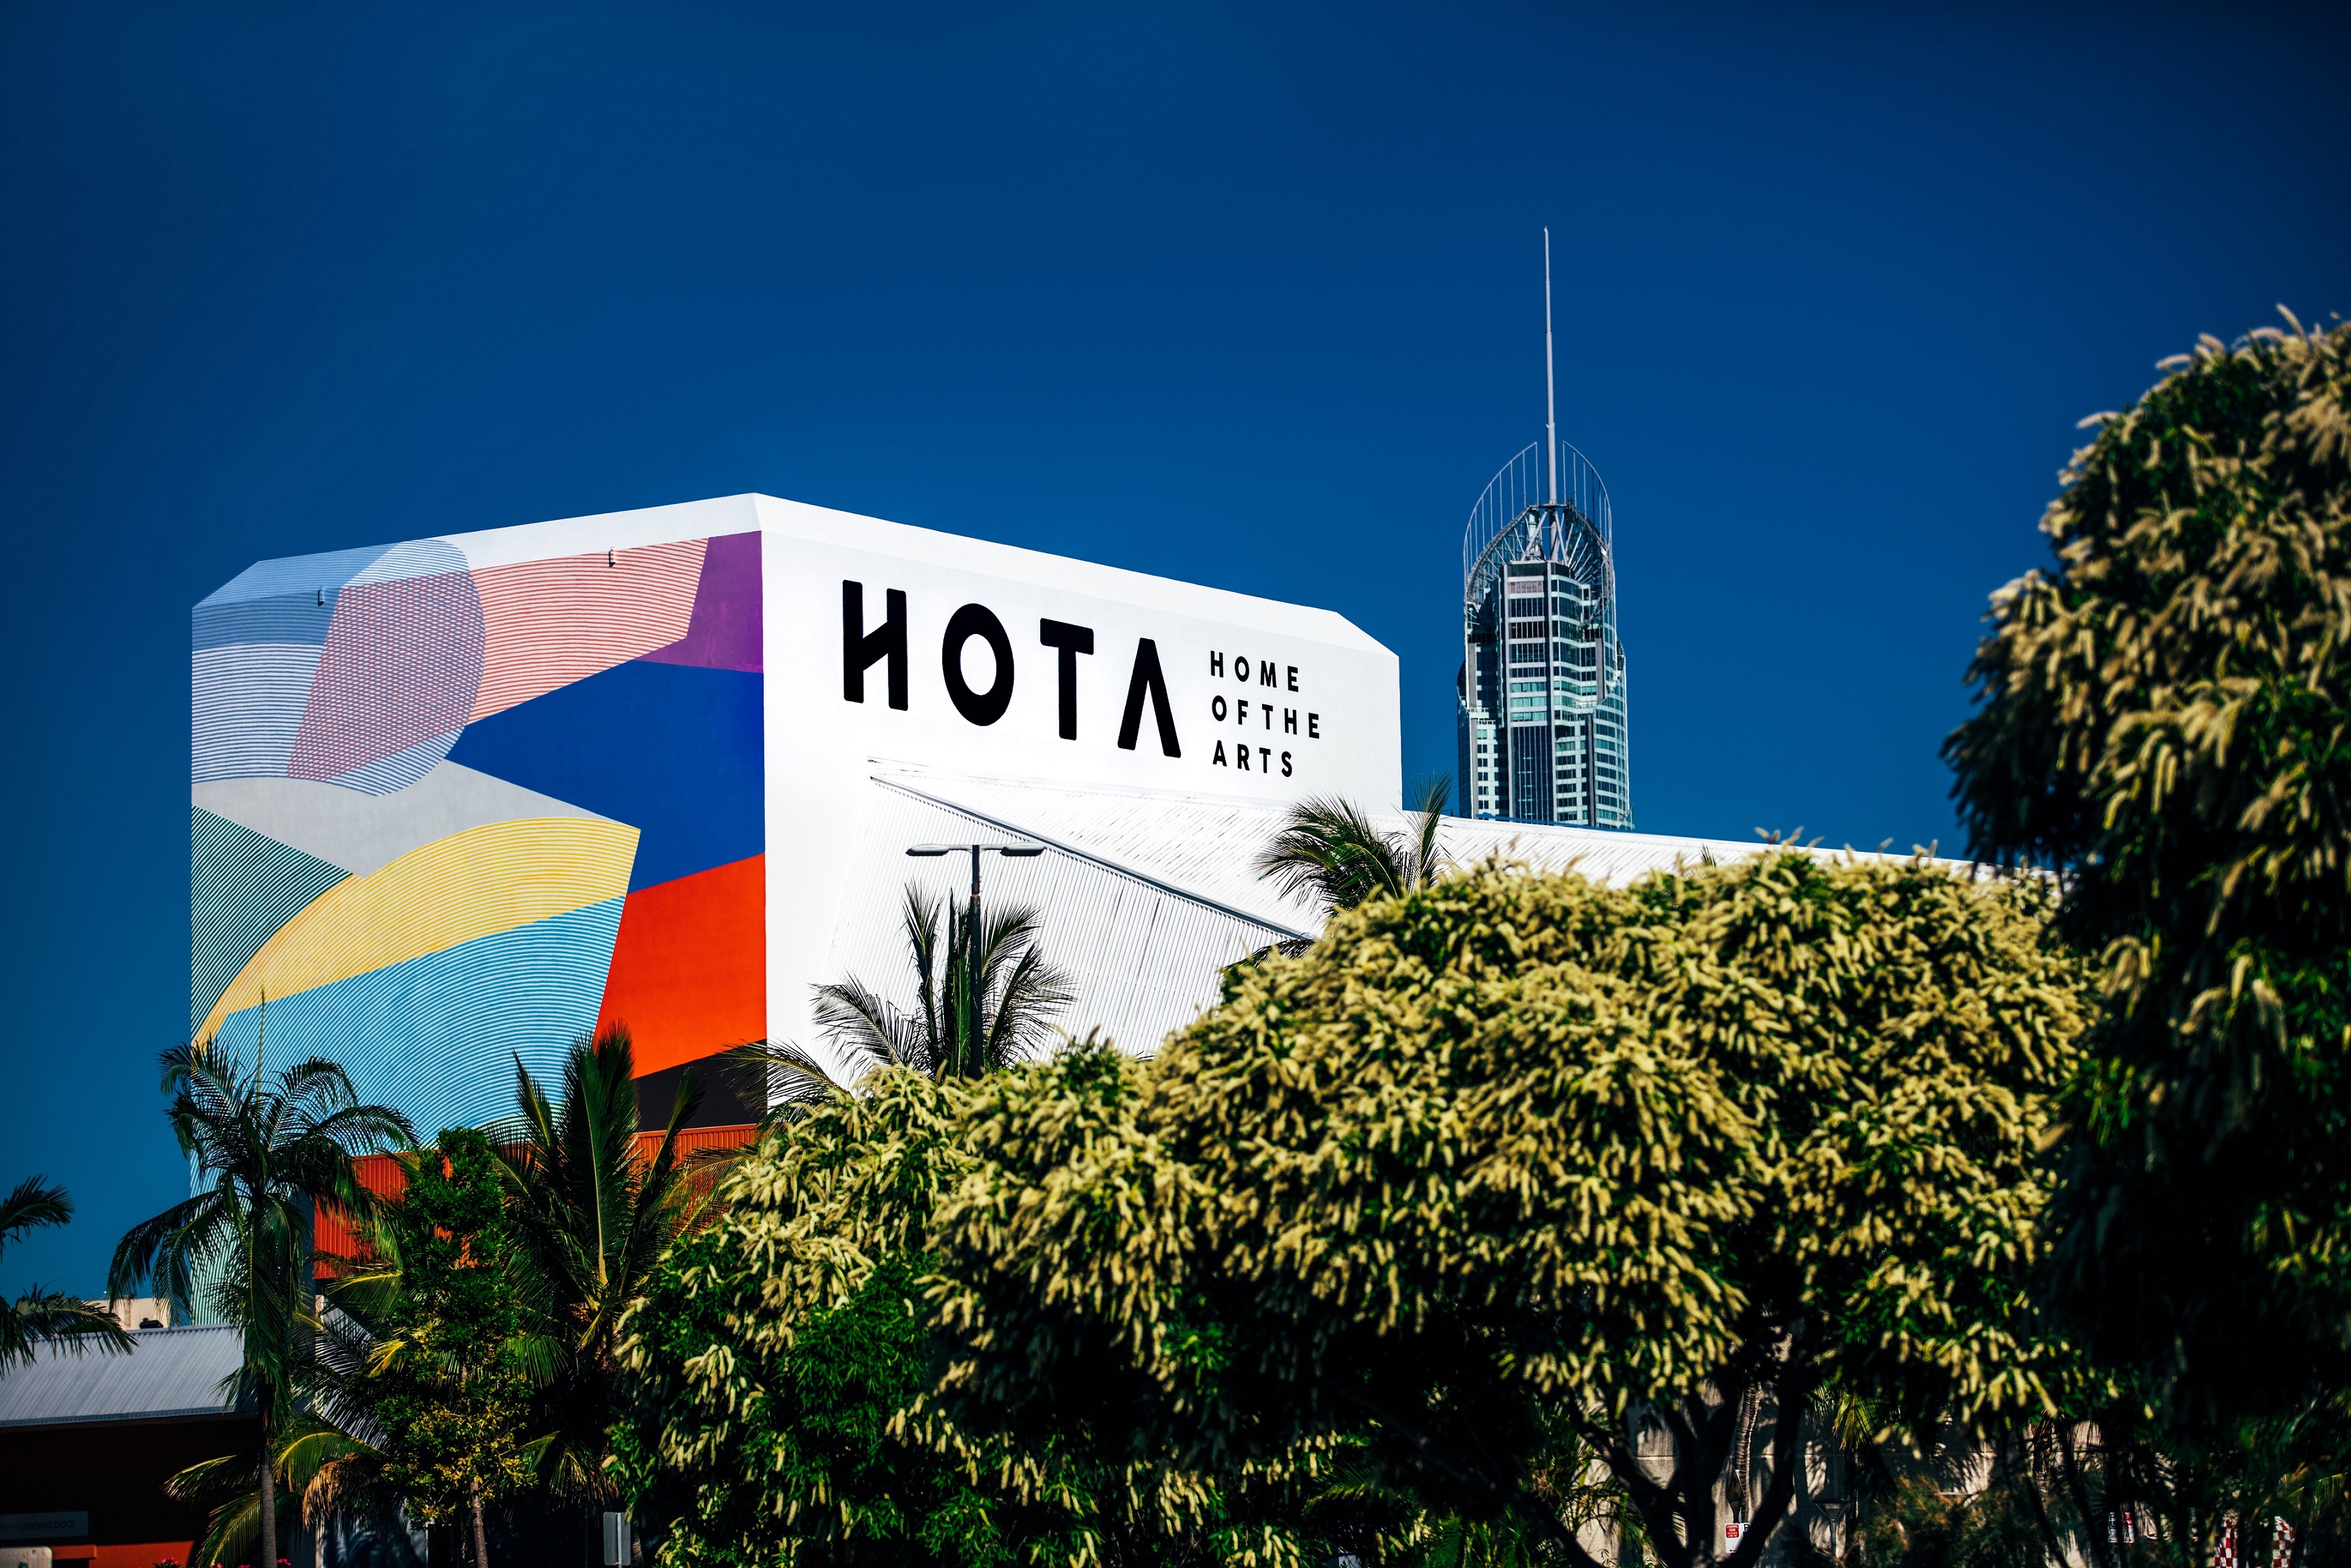 HOTA (Home of the Arts)  on the Gold Coast